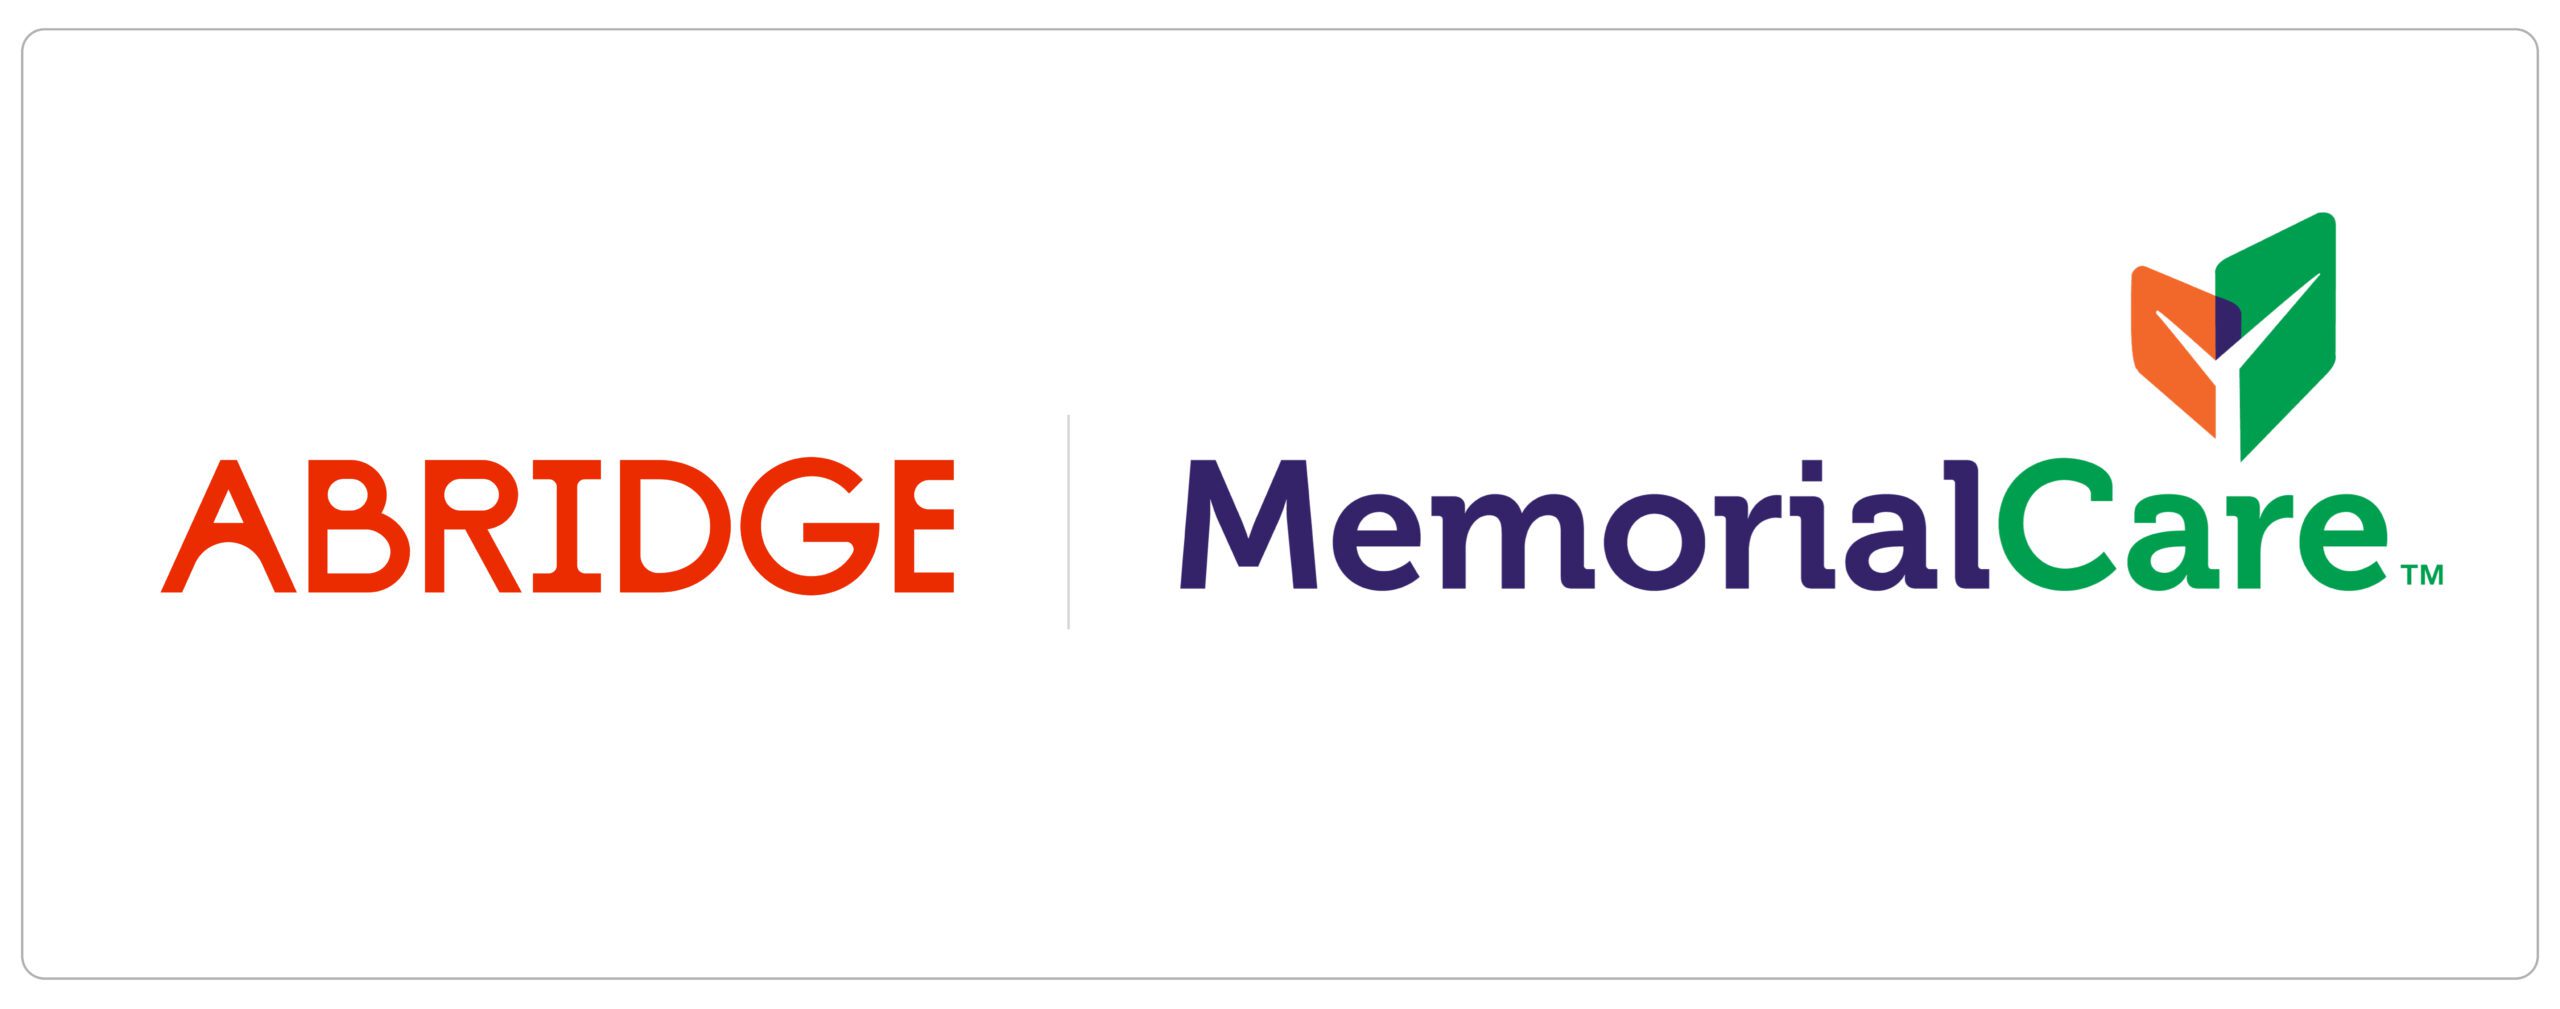 MemorialCare Deploys Abridge’s GenAI Clinical Documentation Across Enterprise